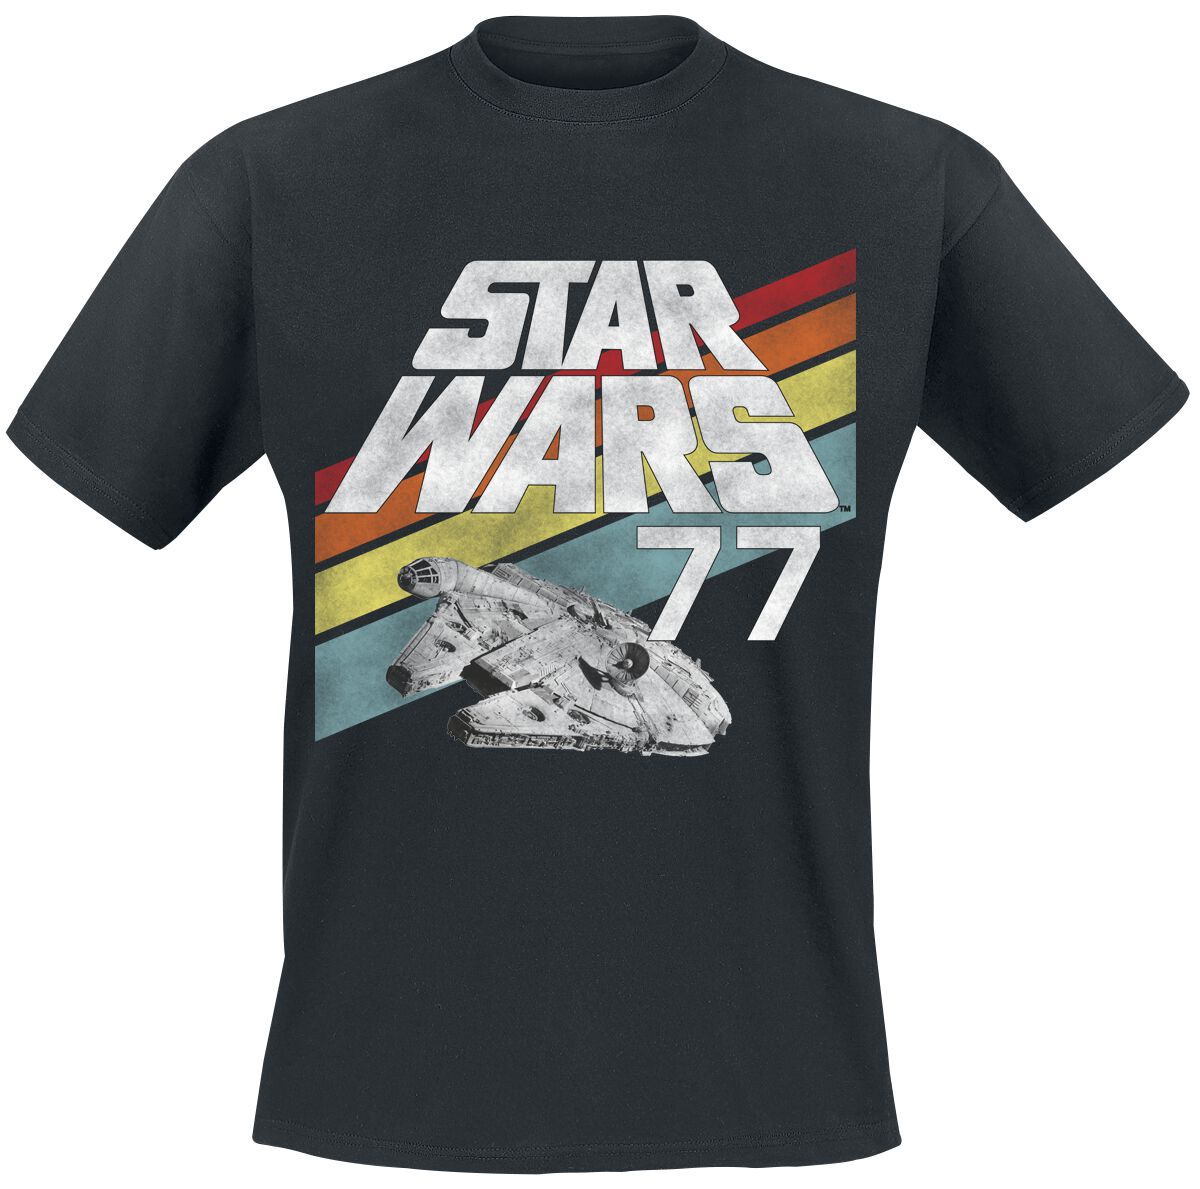 Image of T-Shirt di Star Wars - Star Wars - 77 - S a XXL - Uomo - nero